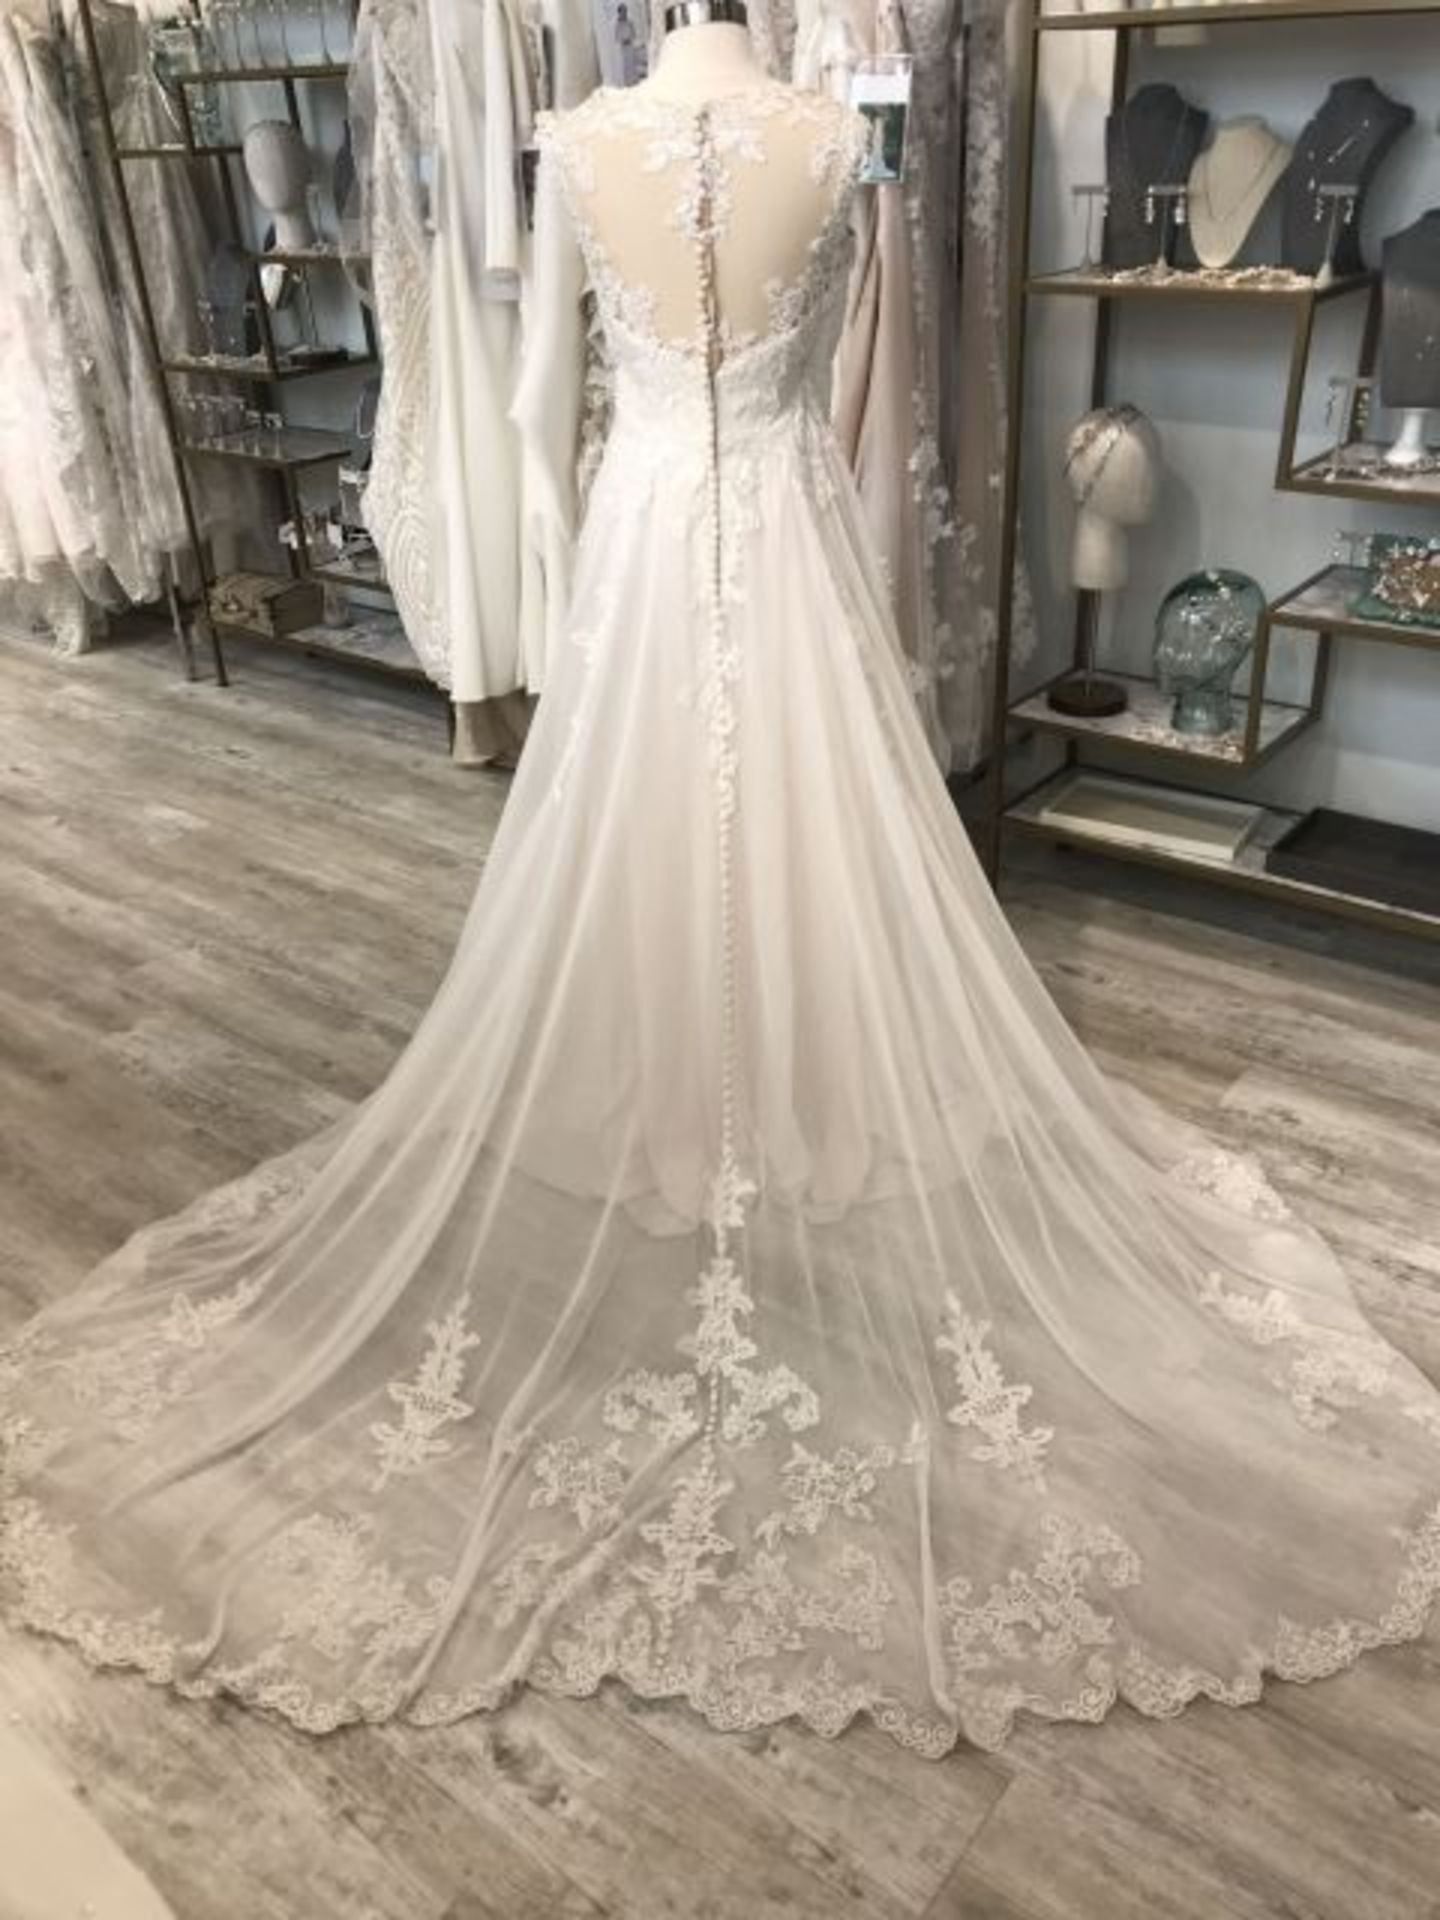 1 x Justin Alexander Designer Beaded Venice Lace A-line Wedding Bridal Dress - Size 16 - RRP £1,545 - Image 3 of 6